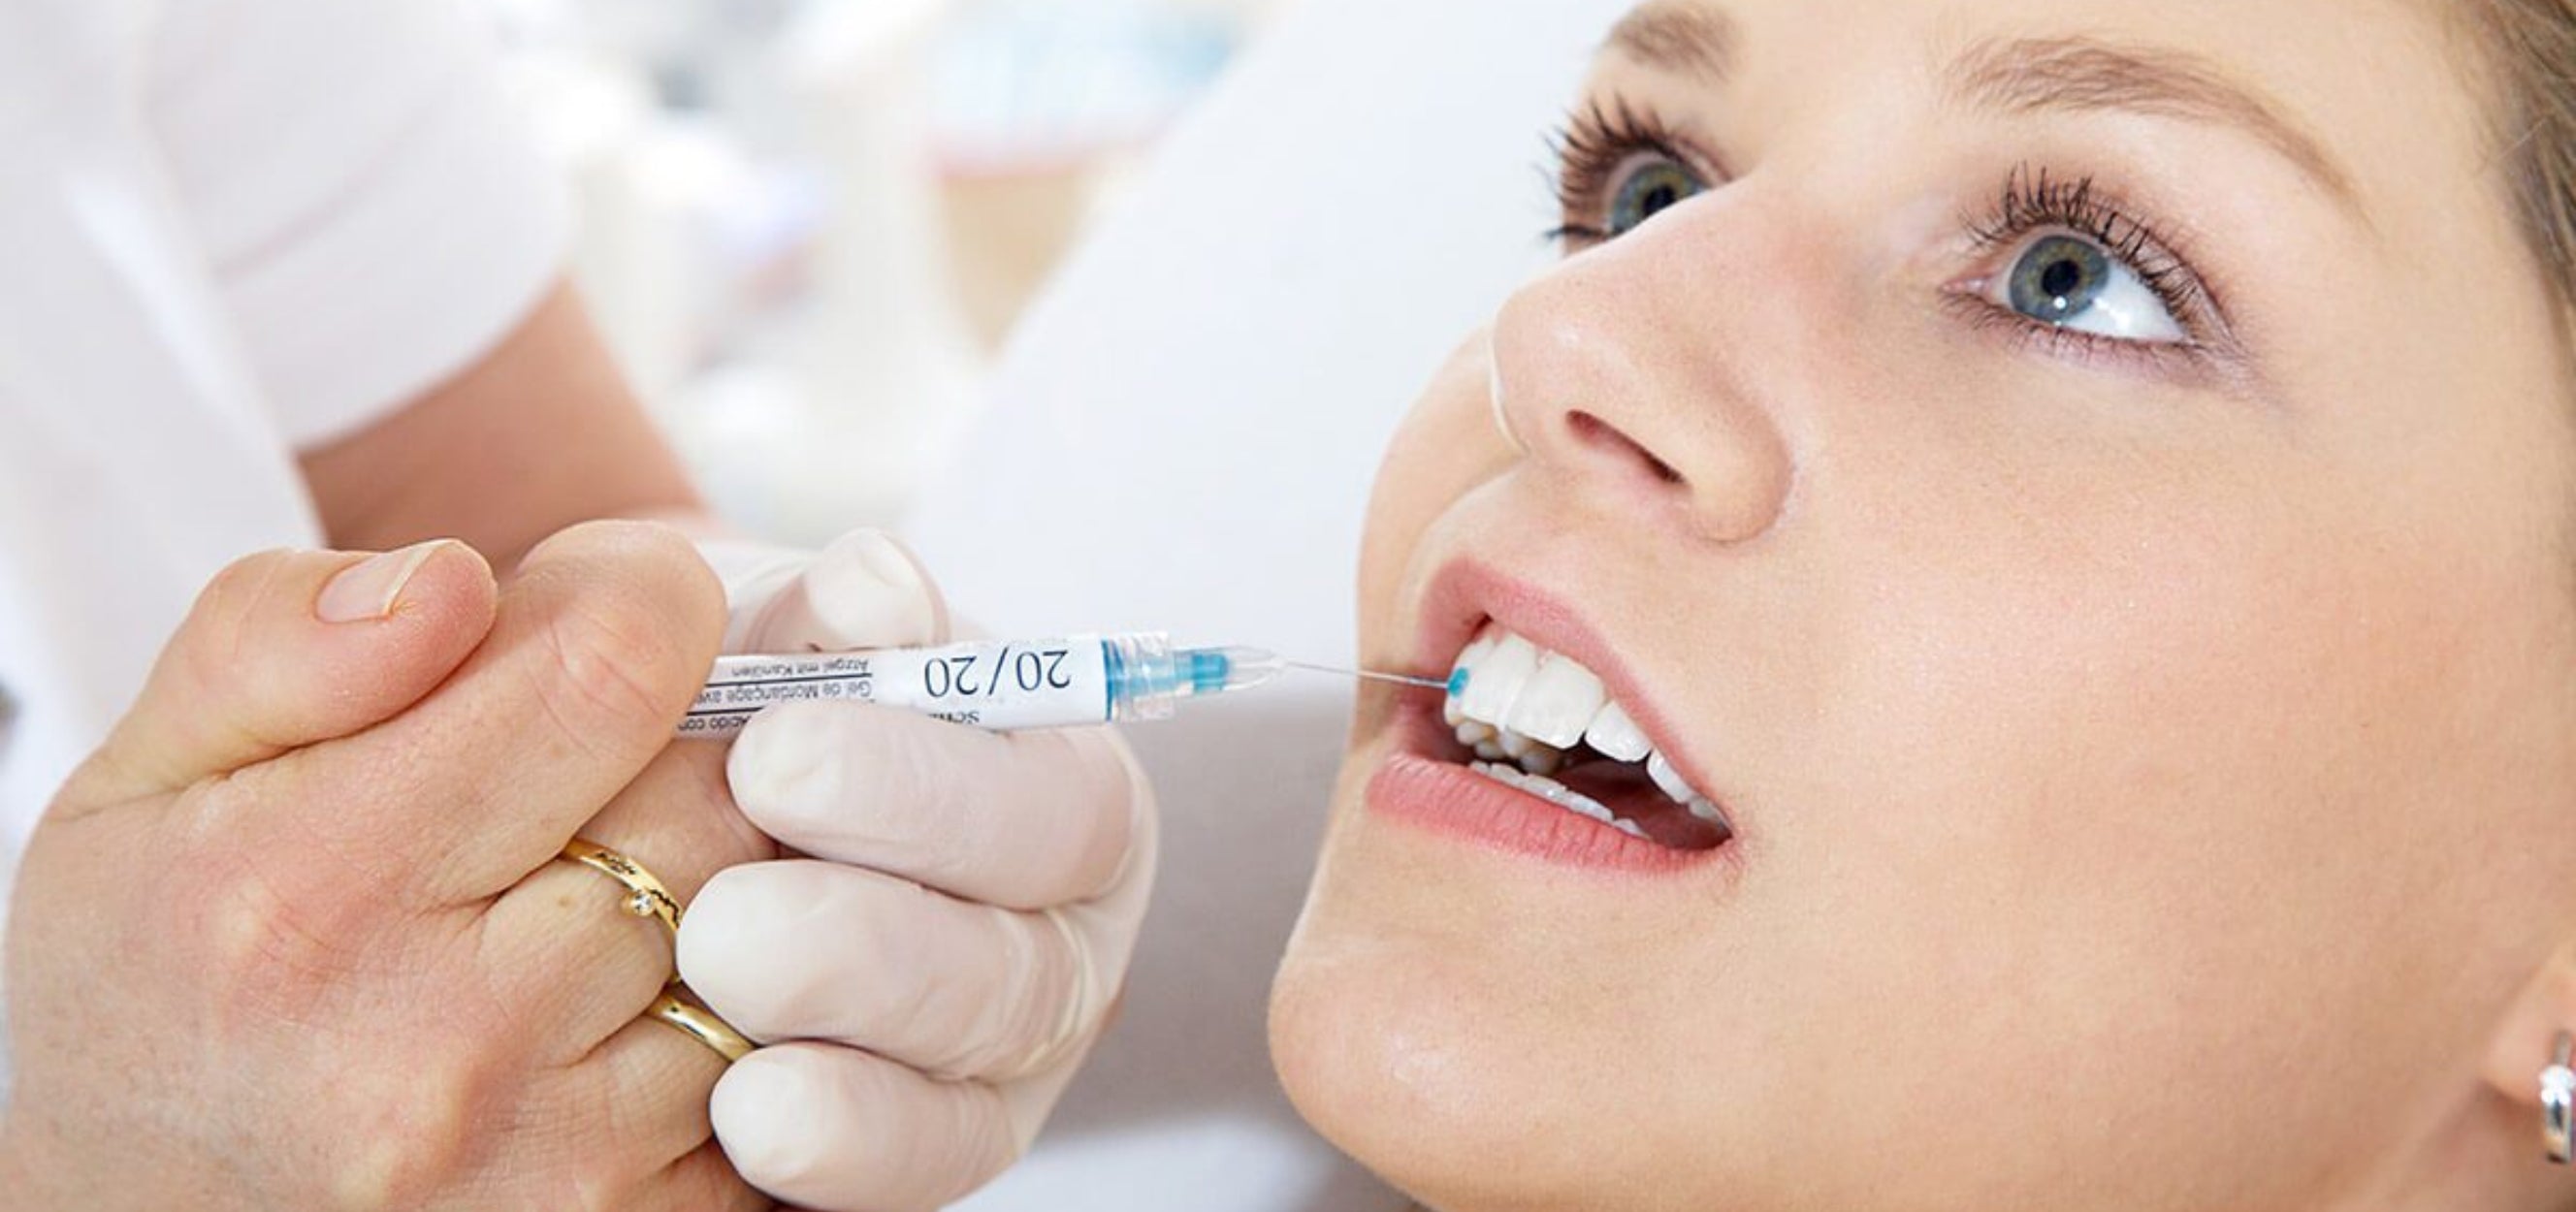 Is Dental Adhesive Safe?